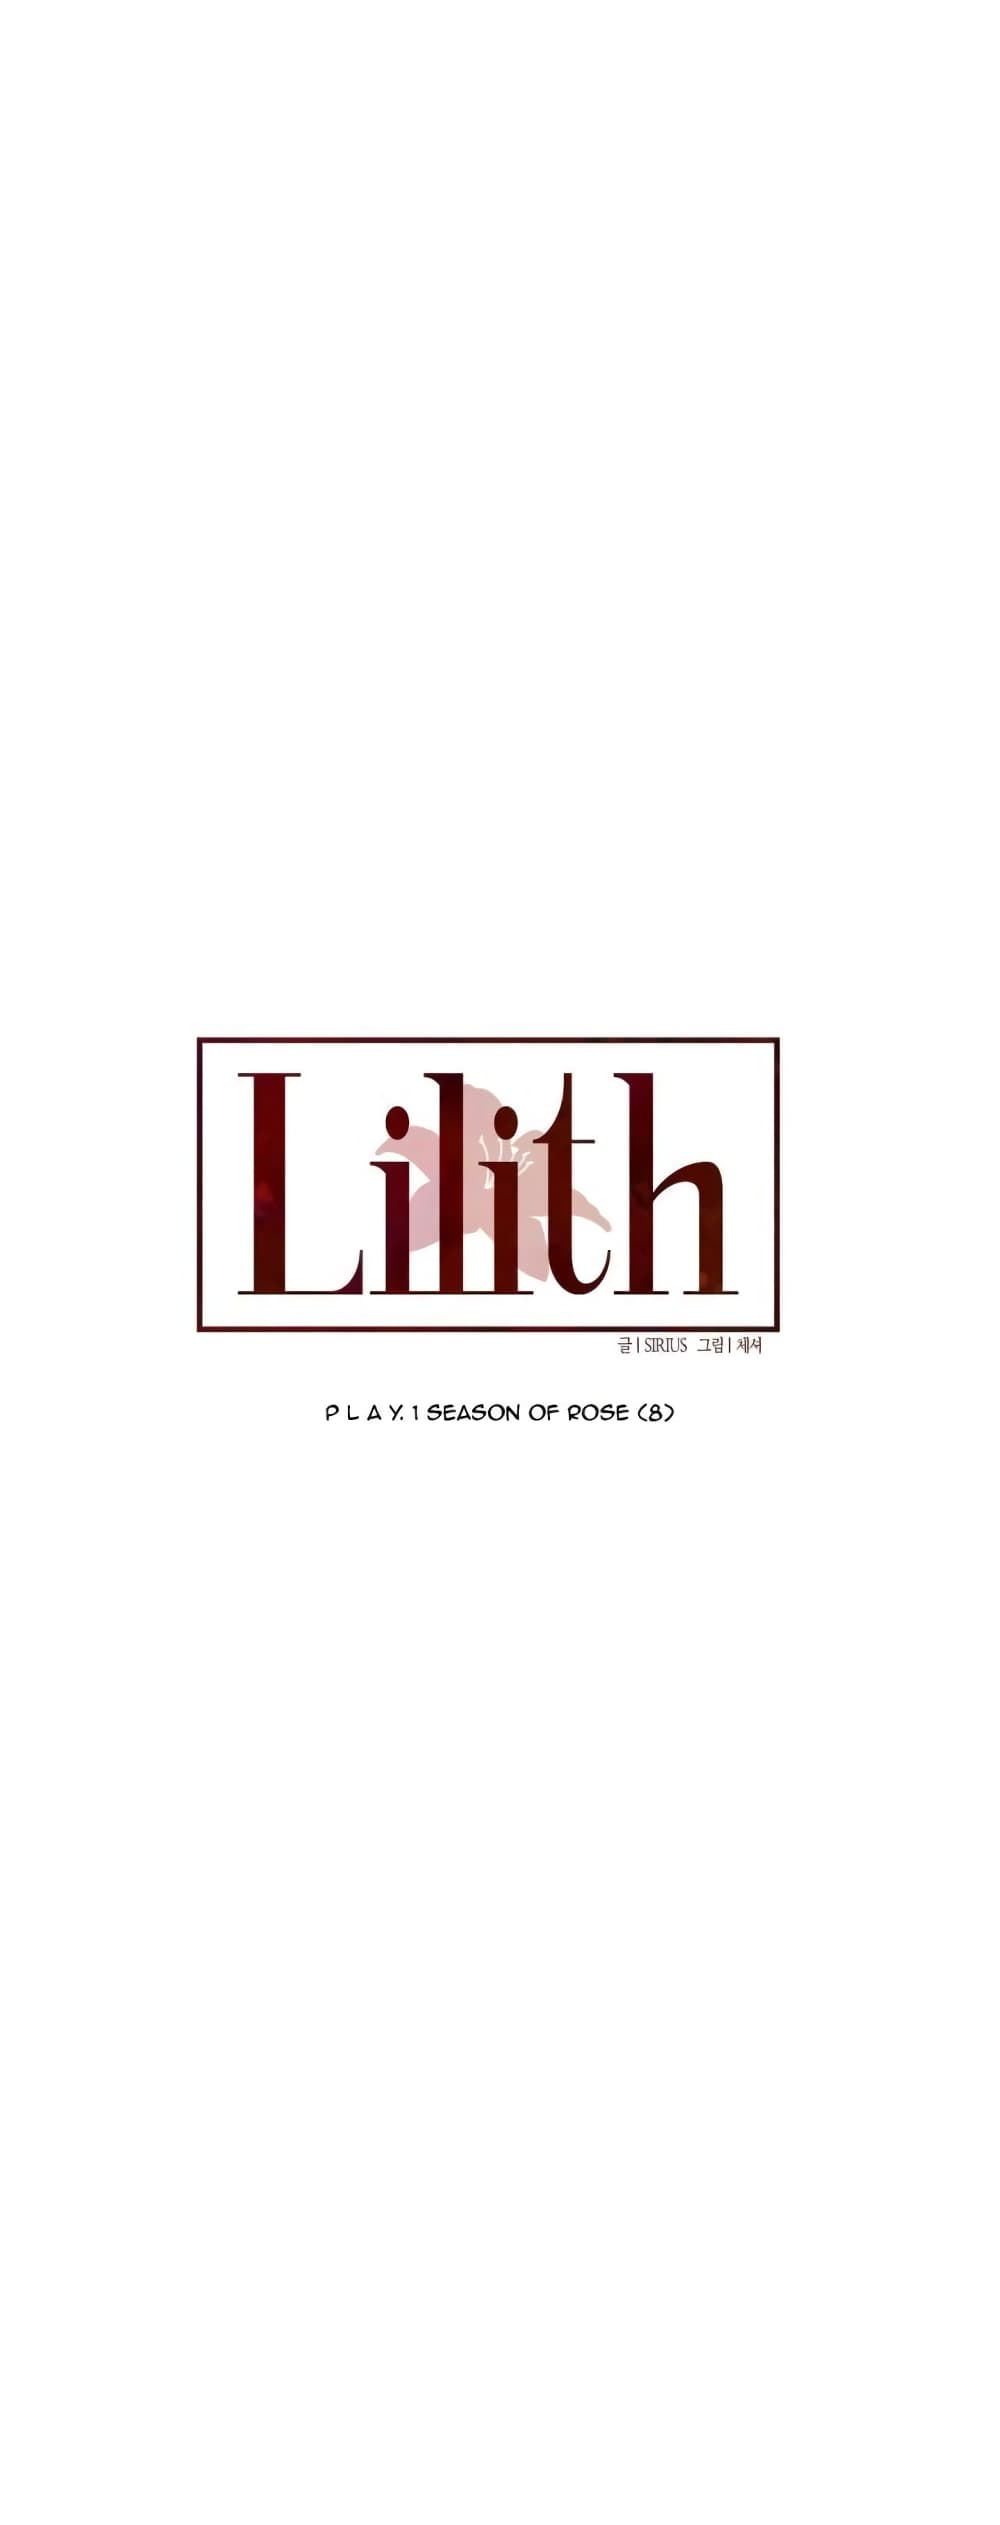 Lilith ตอนที่ 8 (7)